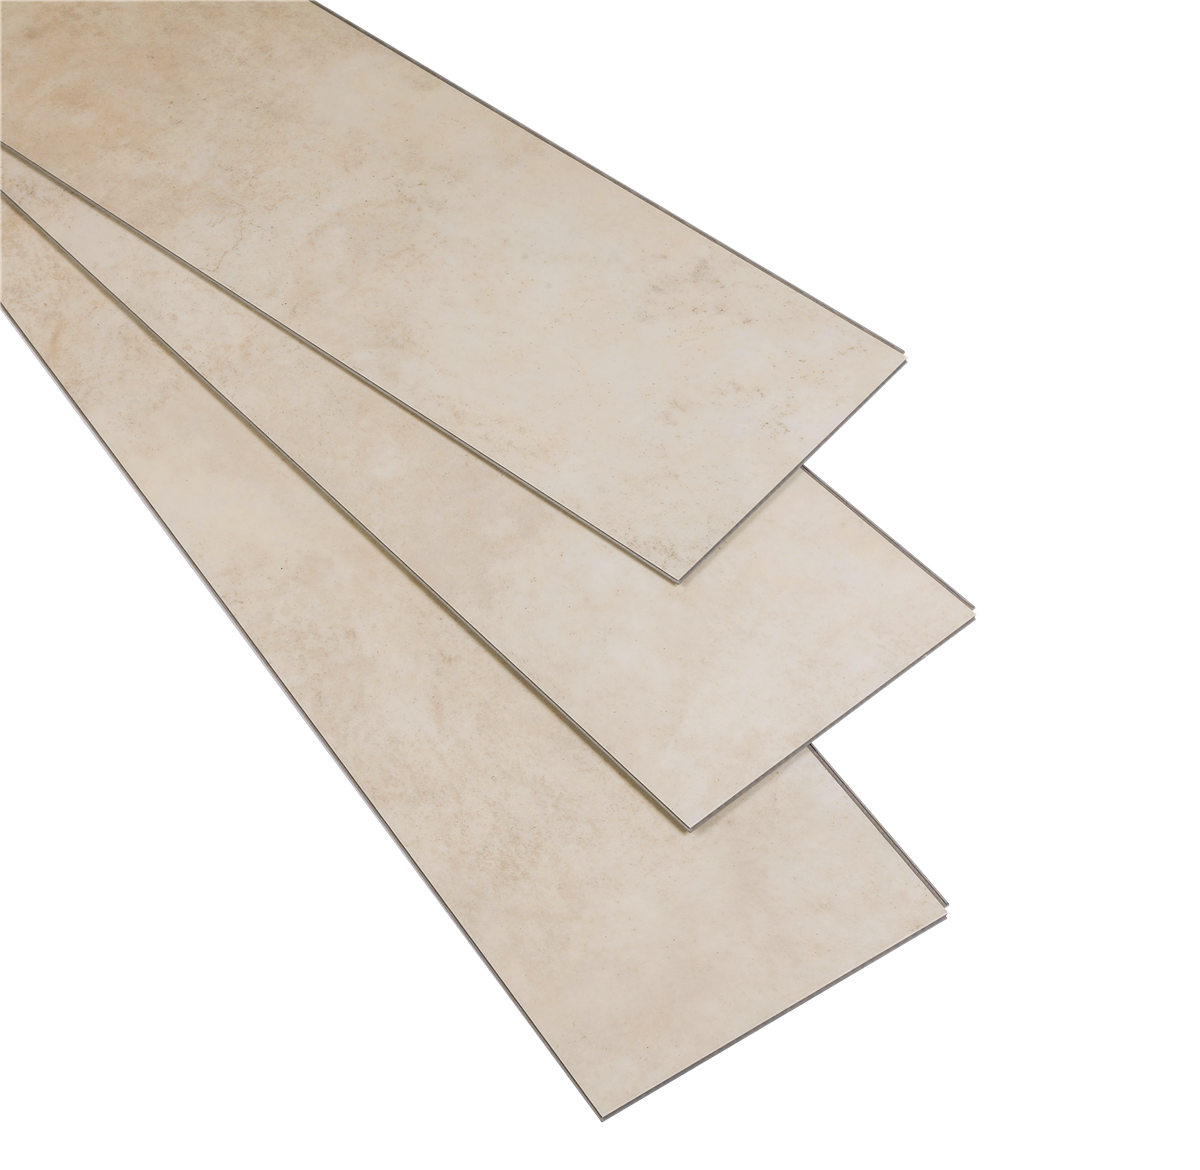 High quality formaldehyde-free waterproof SPC vinyl floor from manufacturer